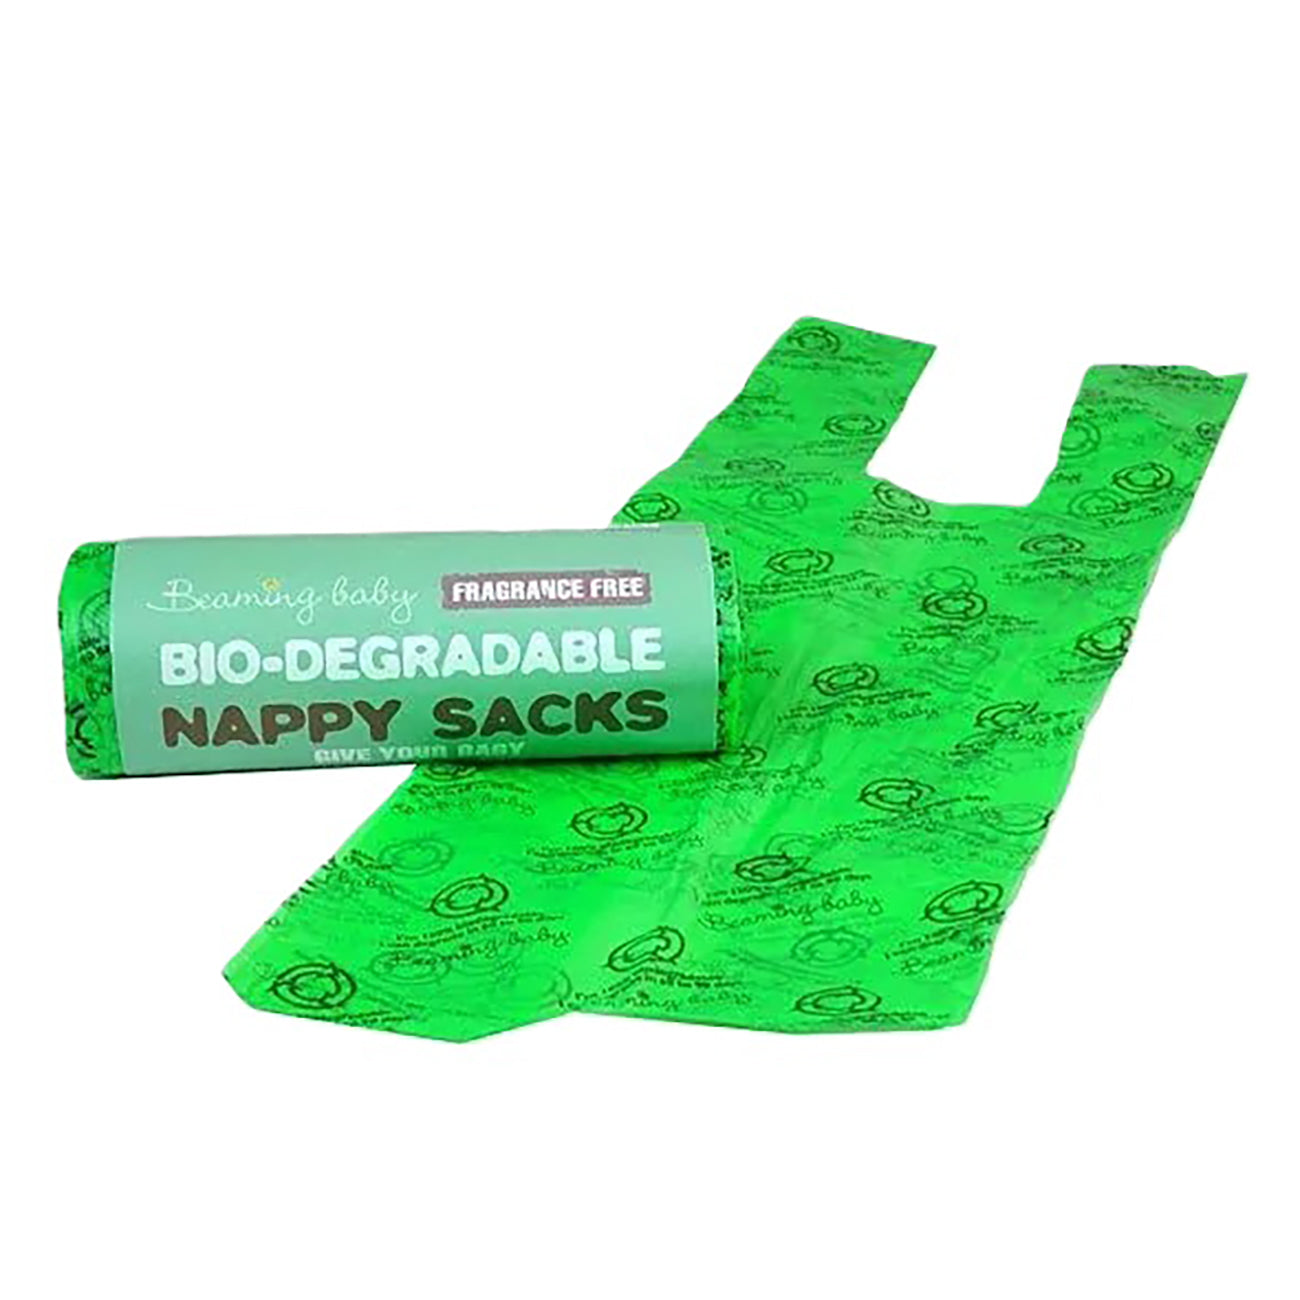 Bio-Degradable Nappy Sacks Fragrance-Free Roll 60